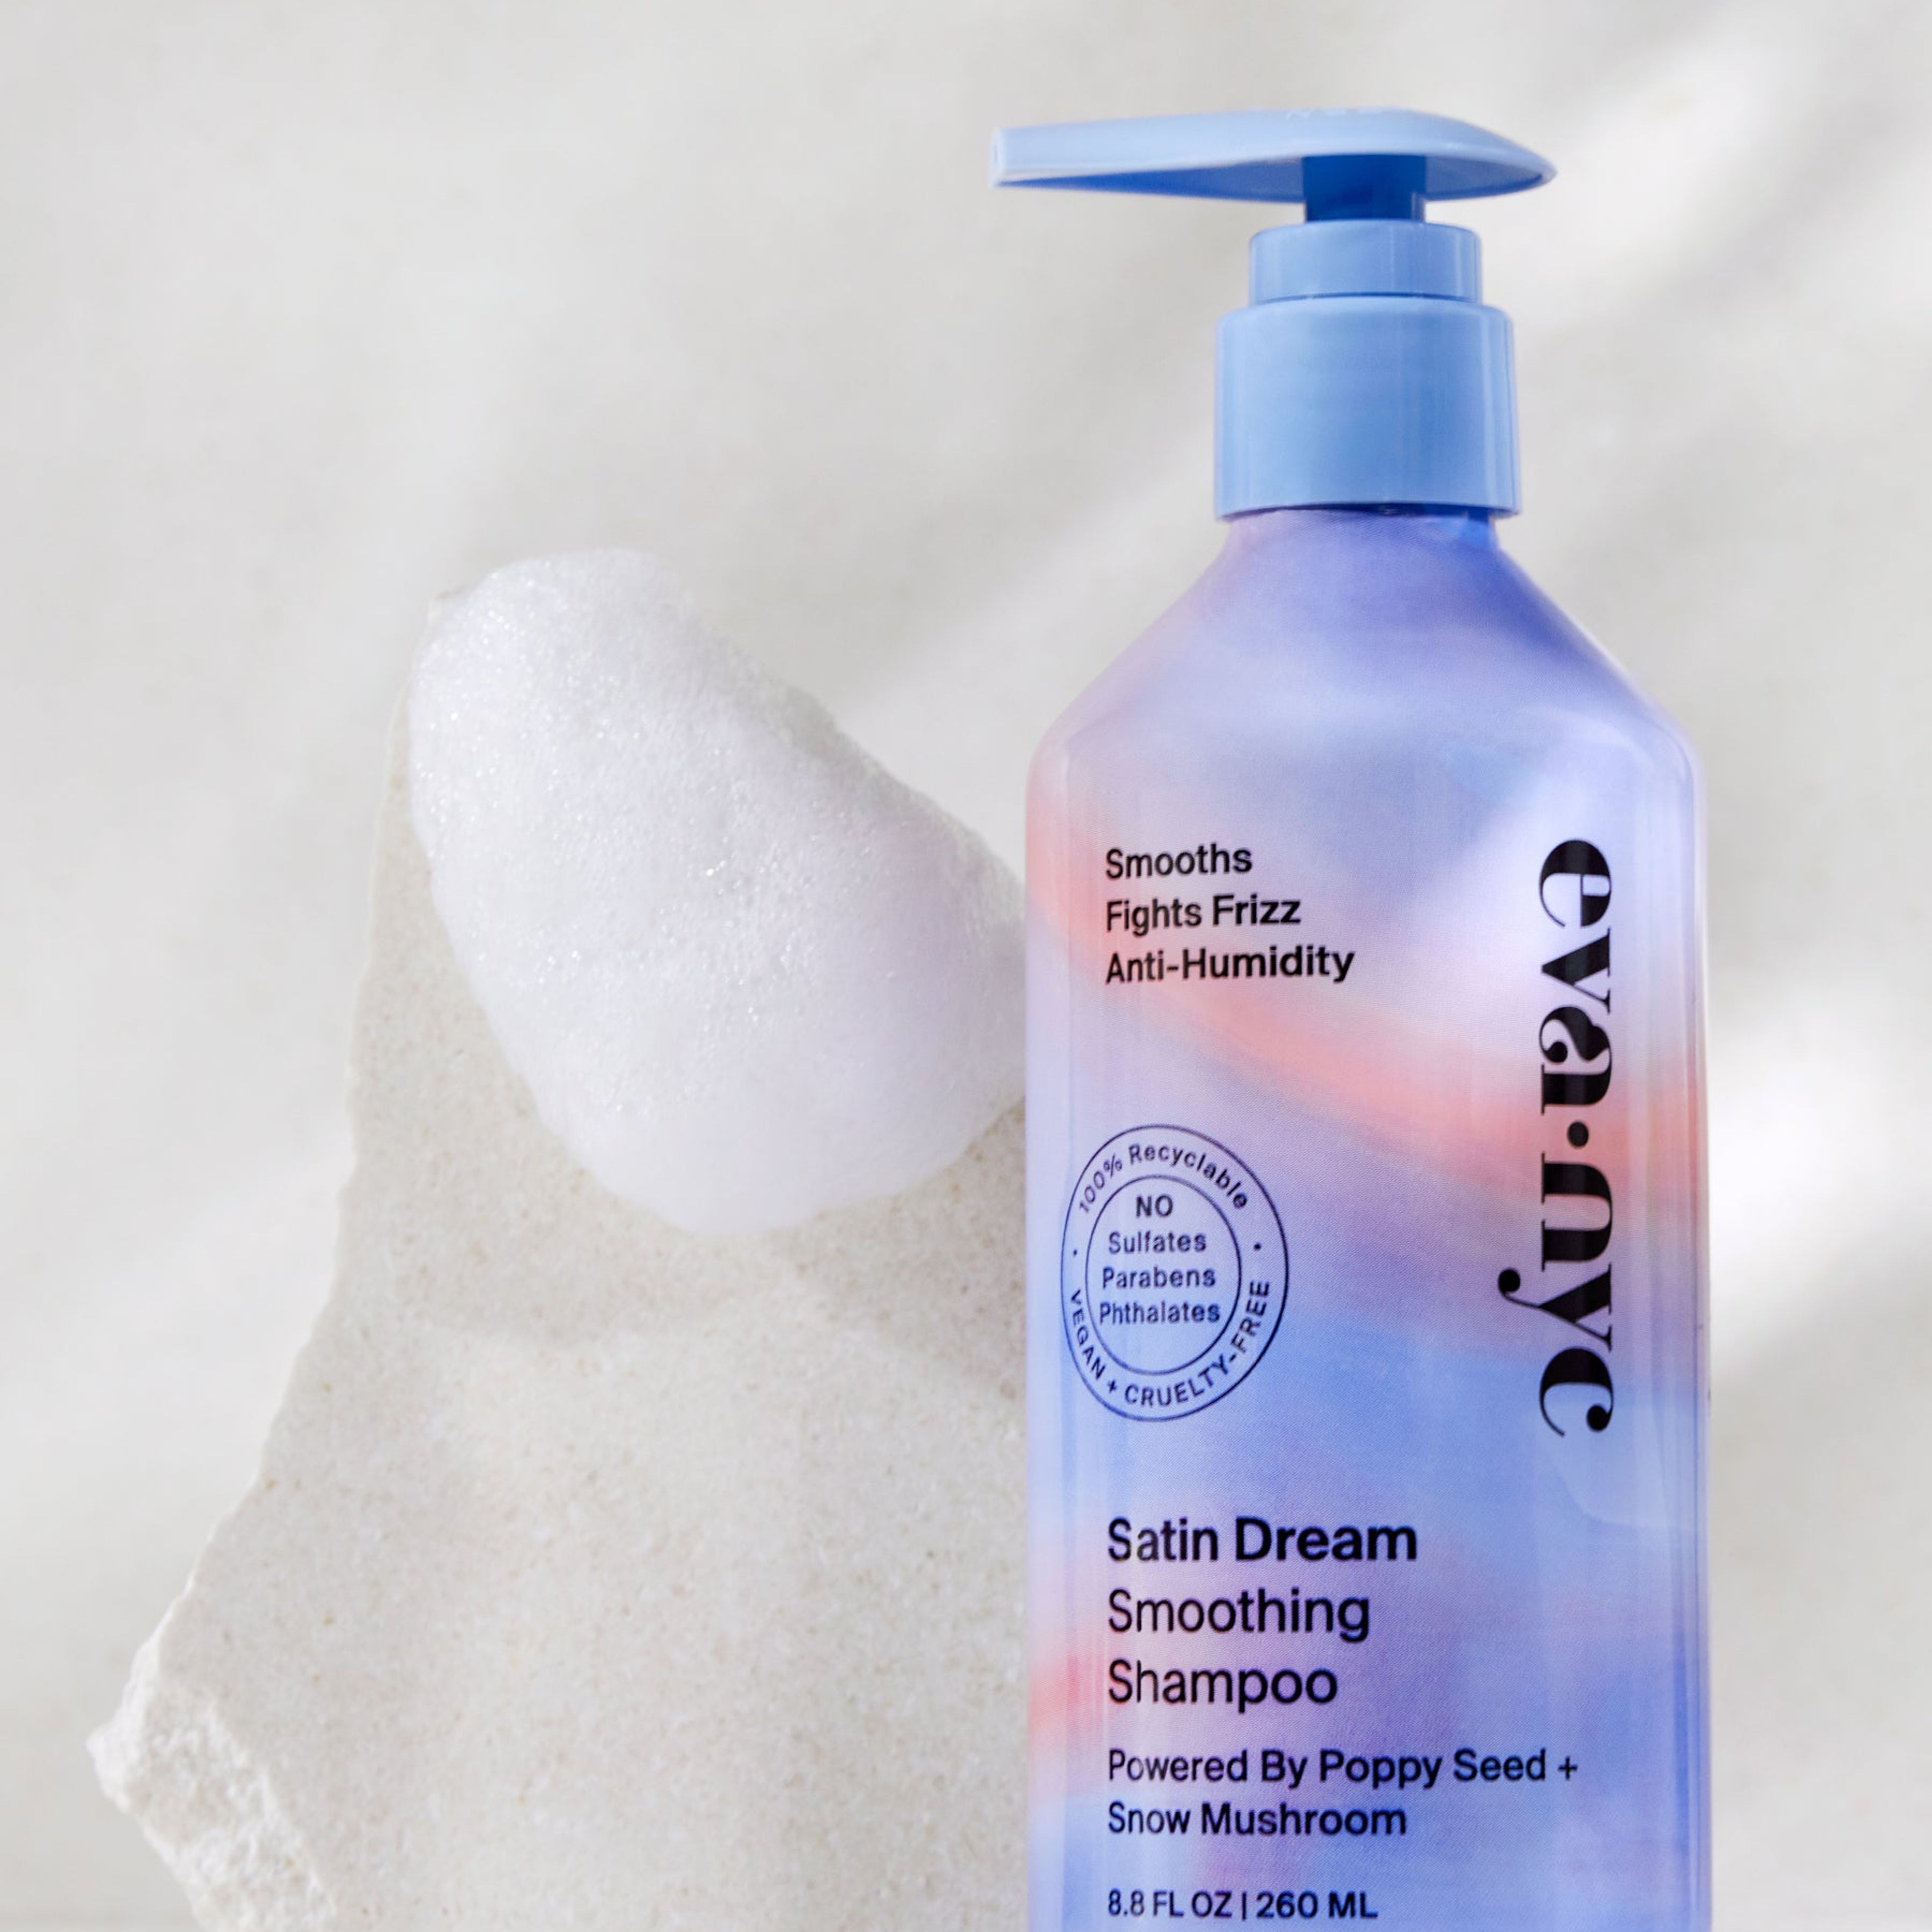 Satin Dream Smoothing Shampoo